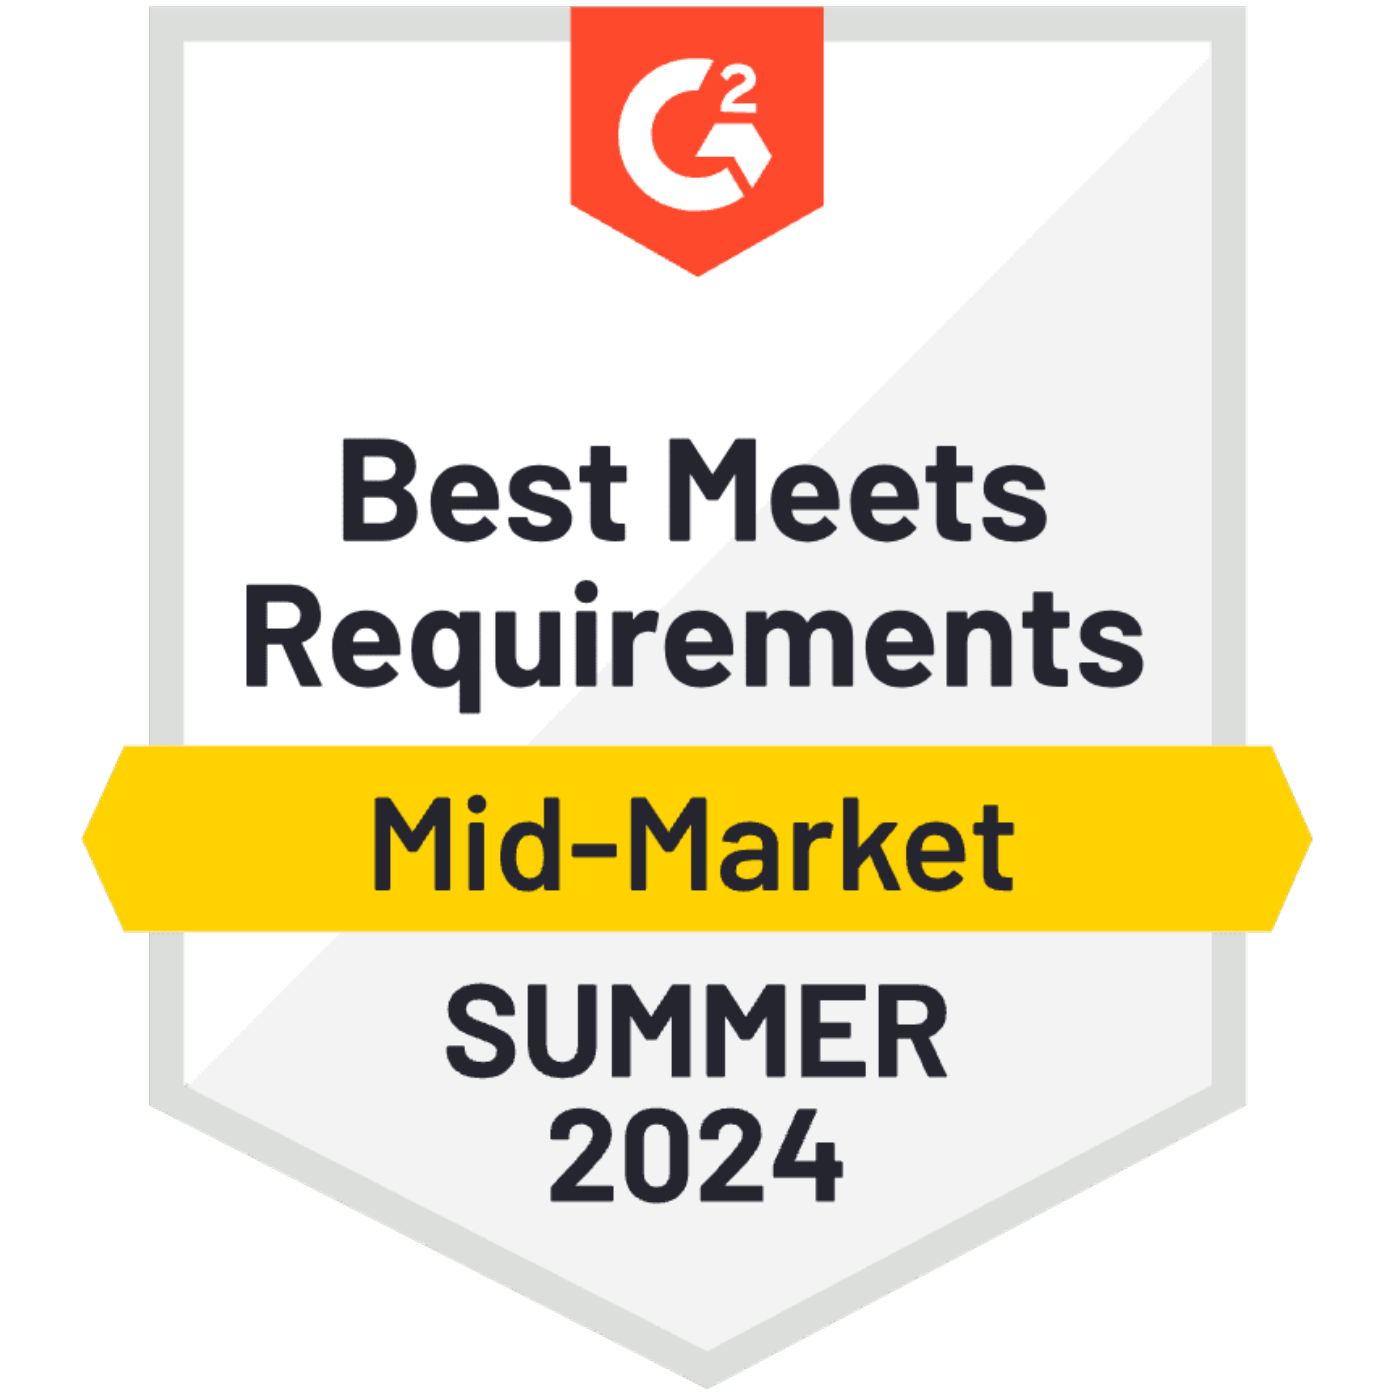 G2 Meets Requirements Mid Market Summer 2024